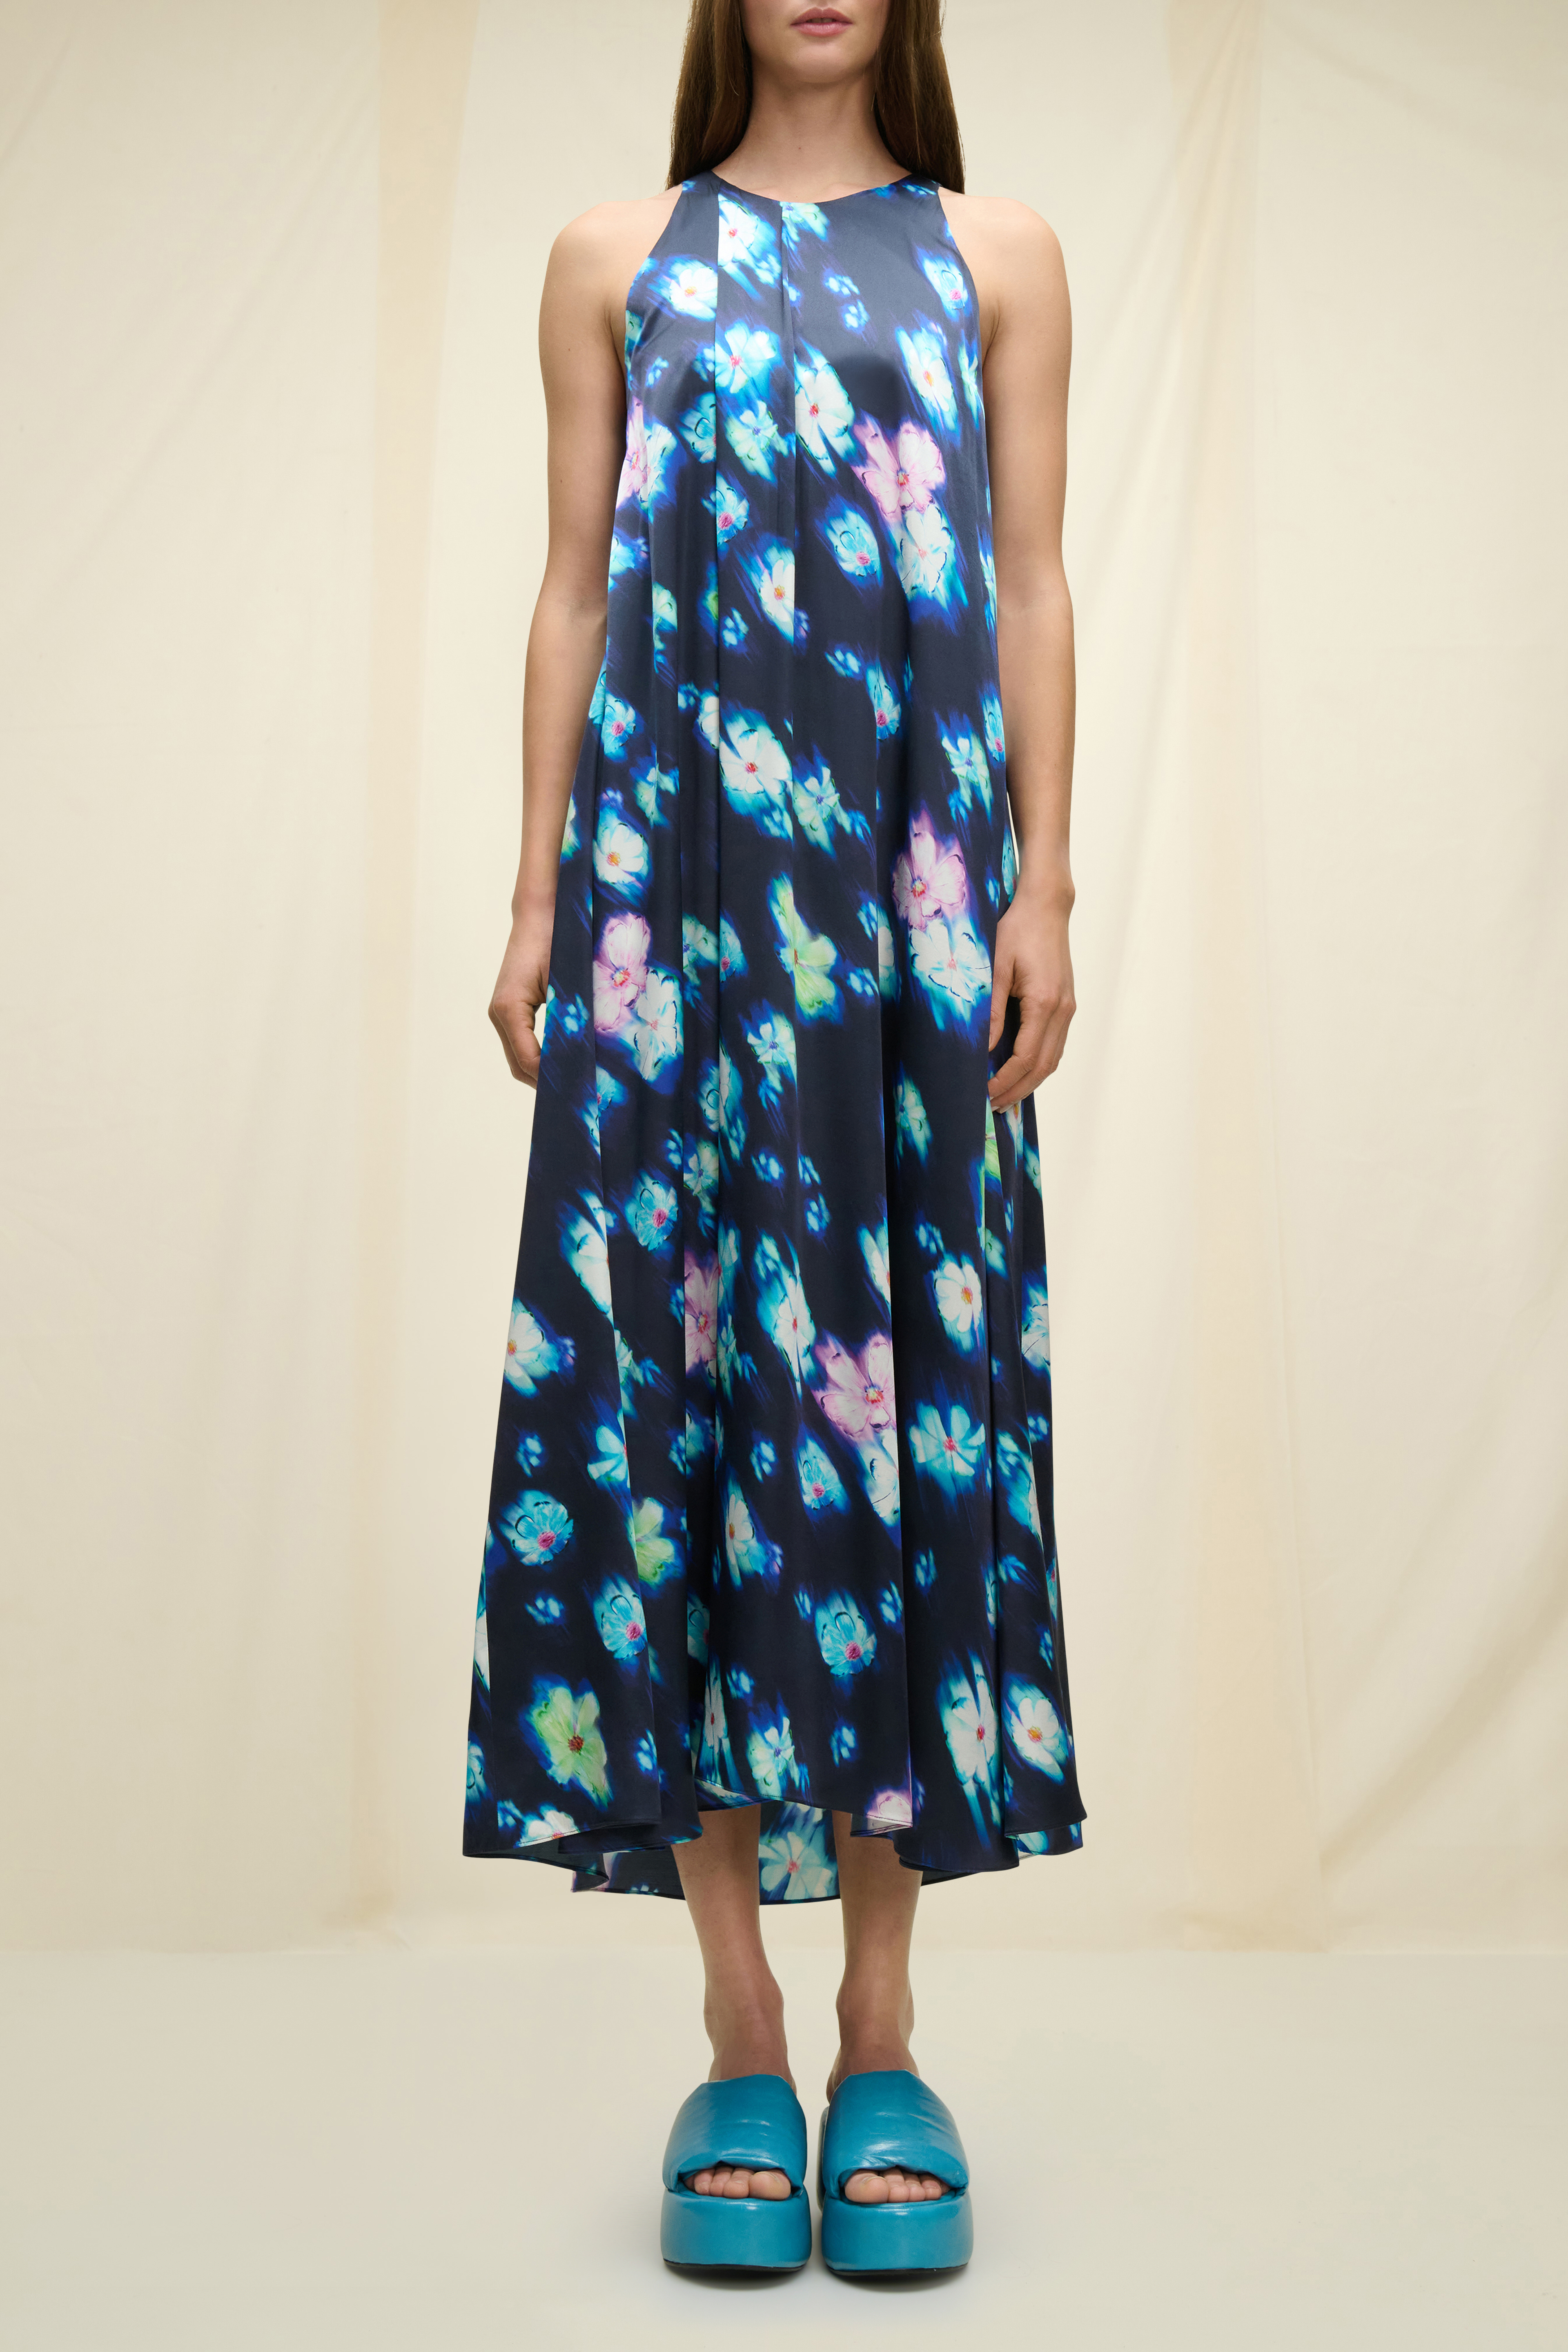 Dorothee Schumacher Neon floral print dress in